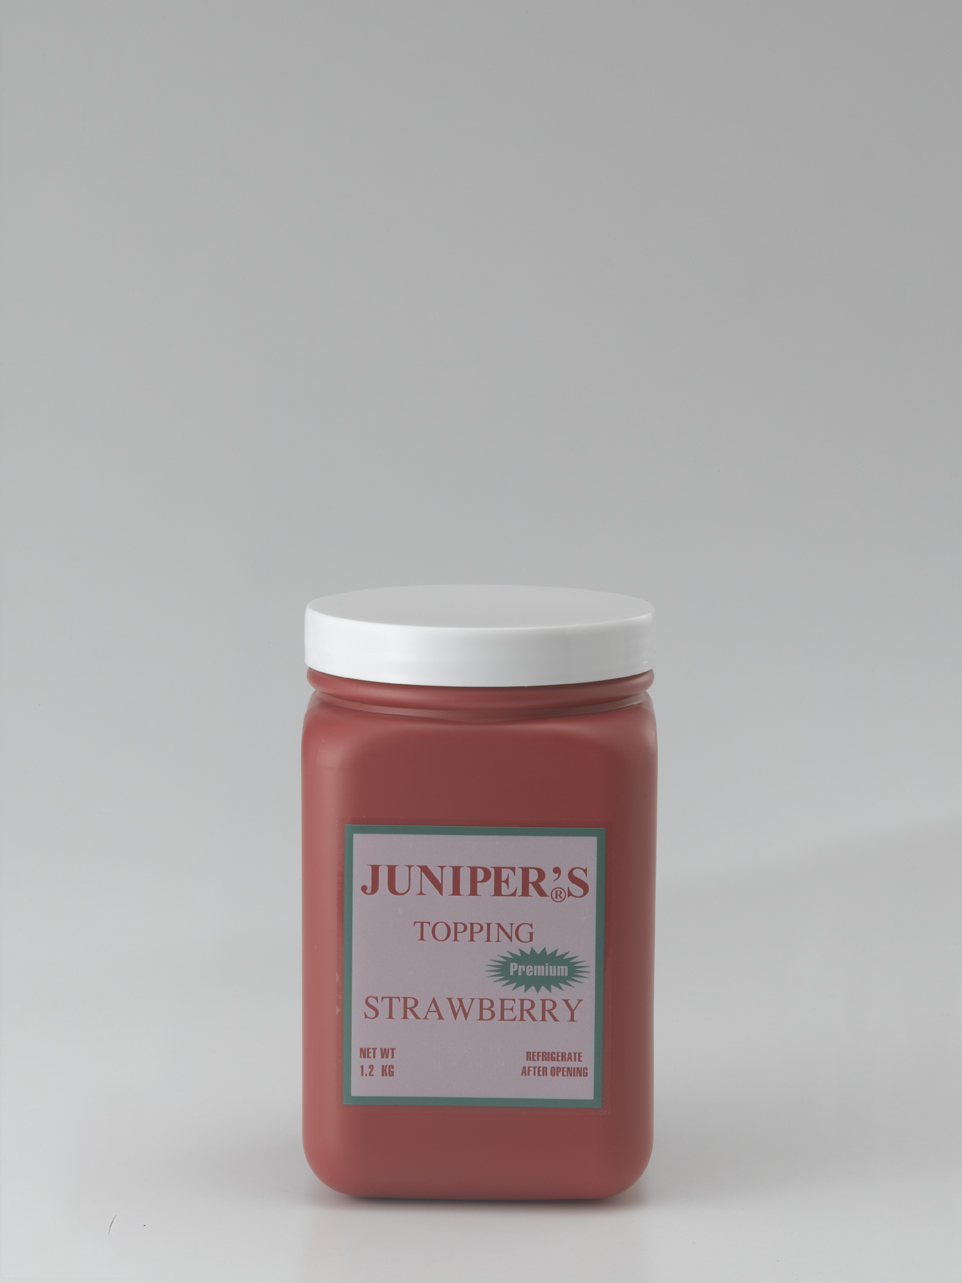 Juniper Strawberry Topping 1.2 KG. (จูนิเปอร์ สตรอเบอร์รี่ ท็อปปิ้ง 1.2 กิโลกรัม)**จำกัดการซื้อ 8 กระปุก / ออร์เดอร์**